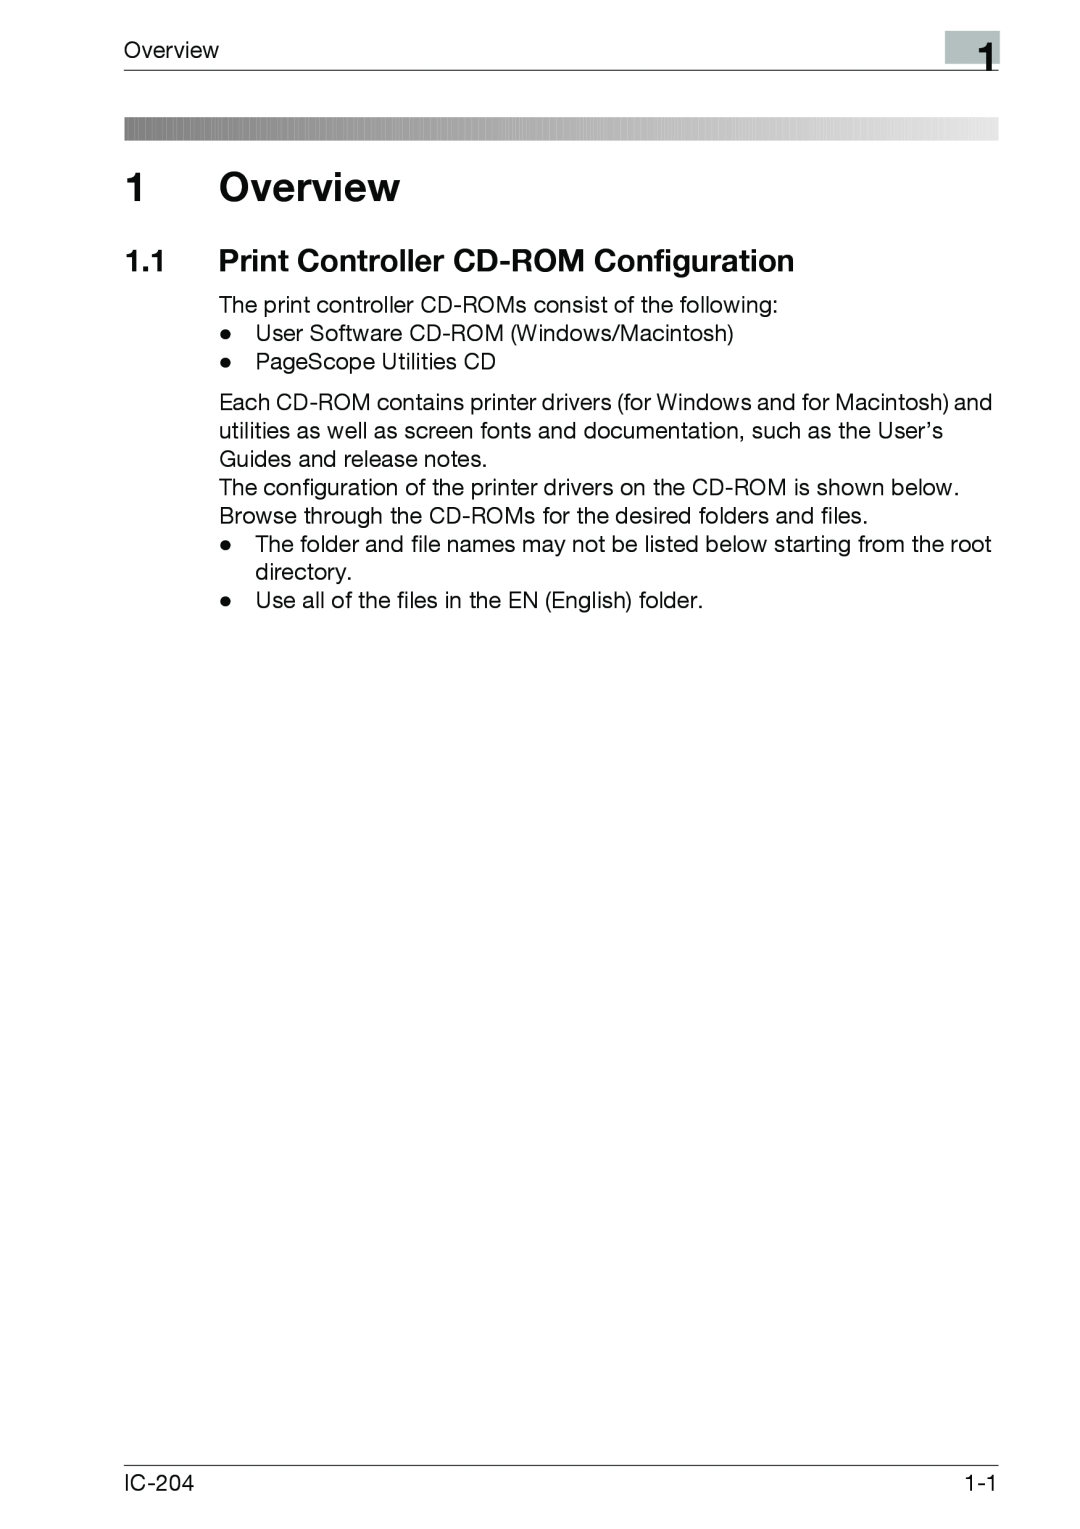 Konica Minolta IC-204 manual Overview, 1.1Print Controller CD-ROMConfiguration 